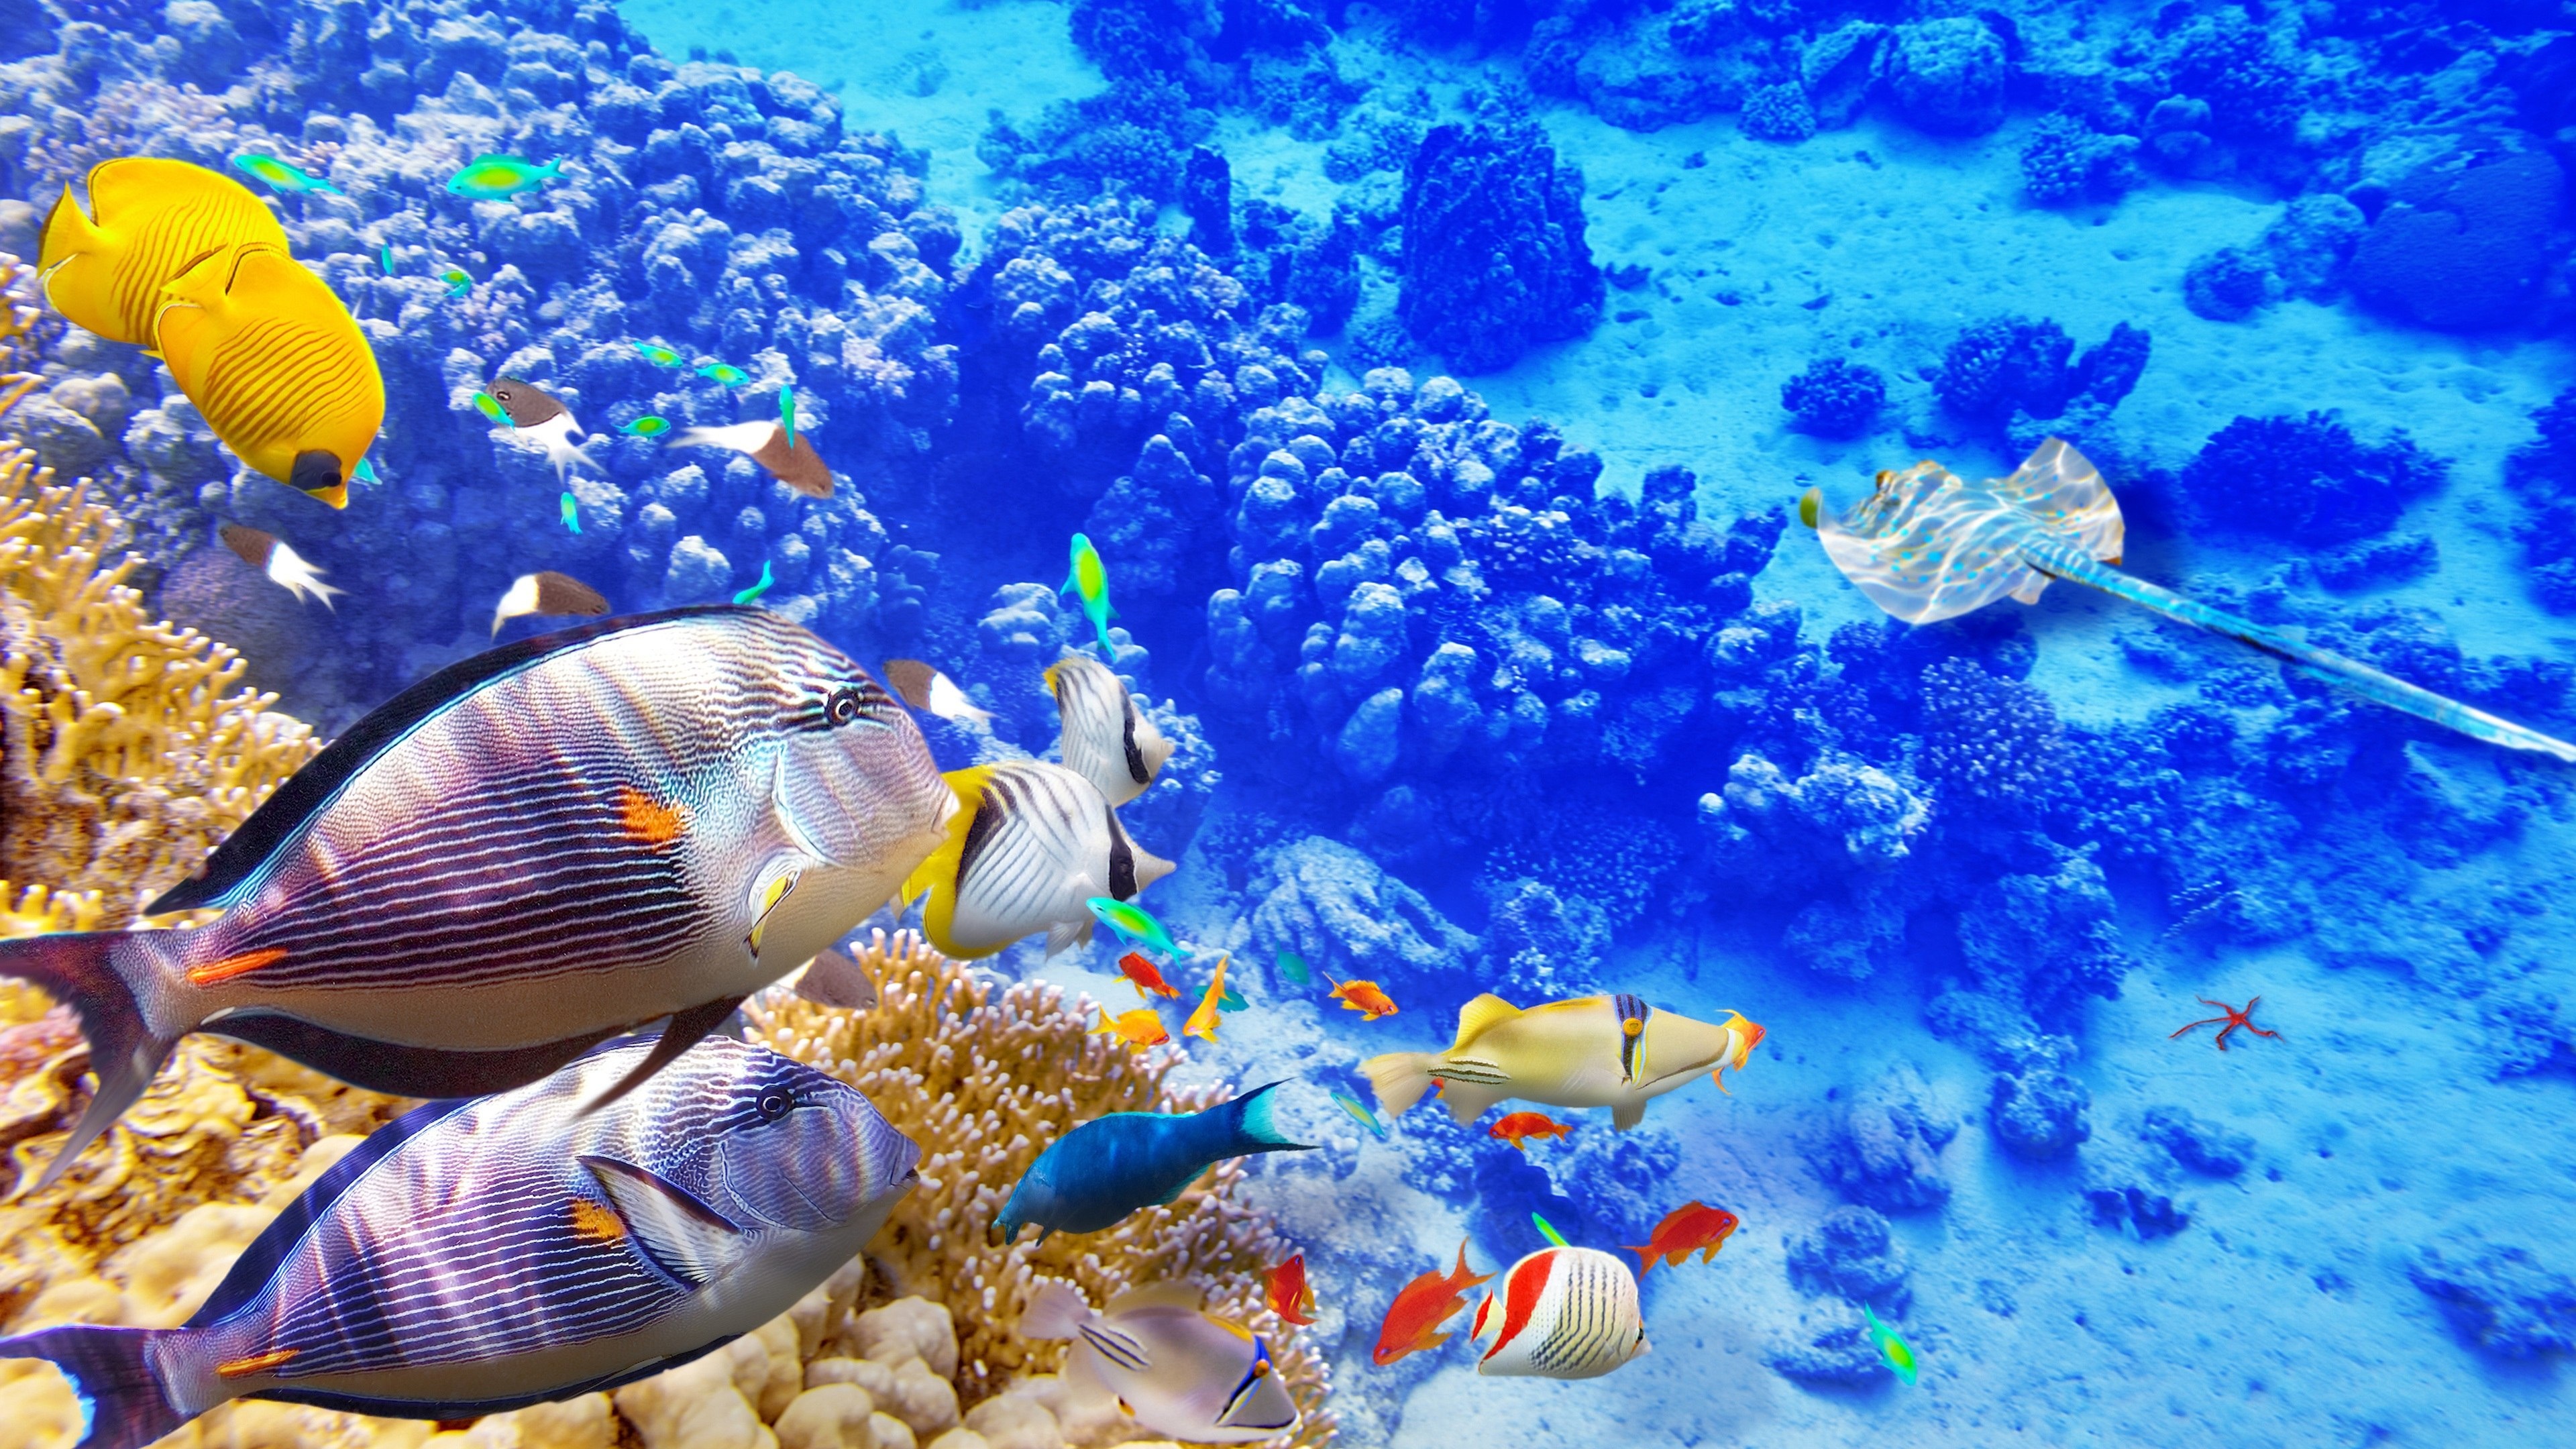 Tropical fish, Vibrant wallpapers, Underwater world, Astonishing beauty, 3840x2160 4K Desktop